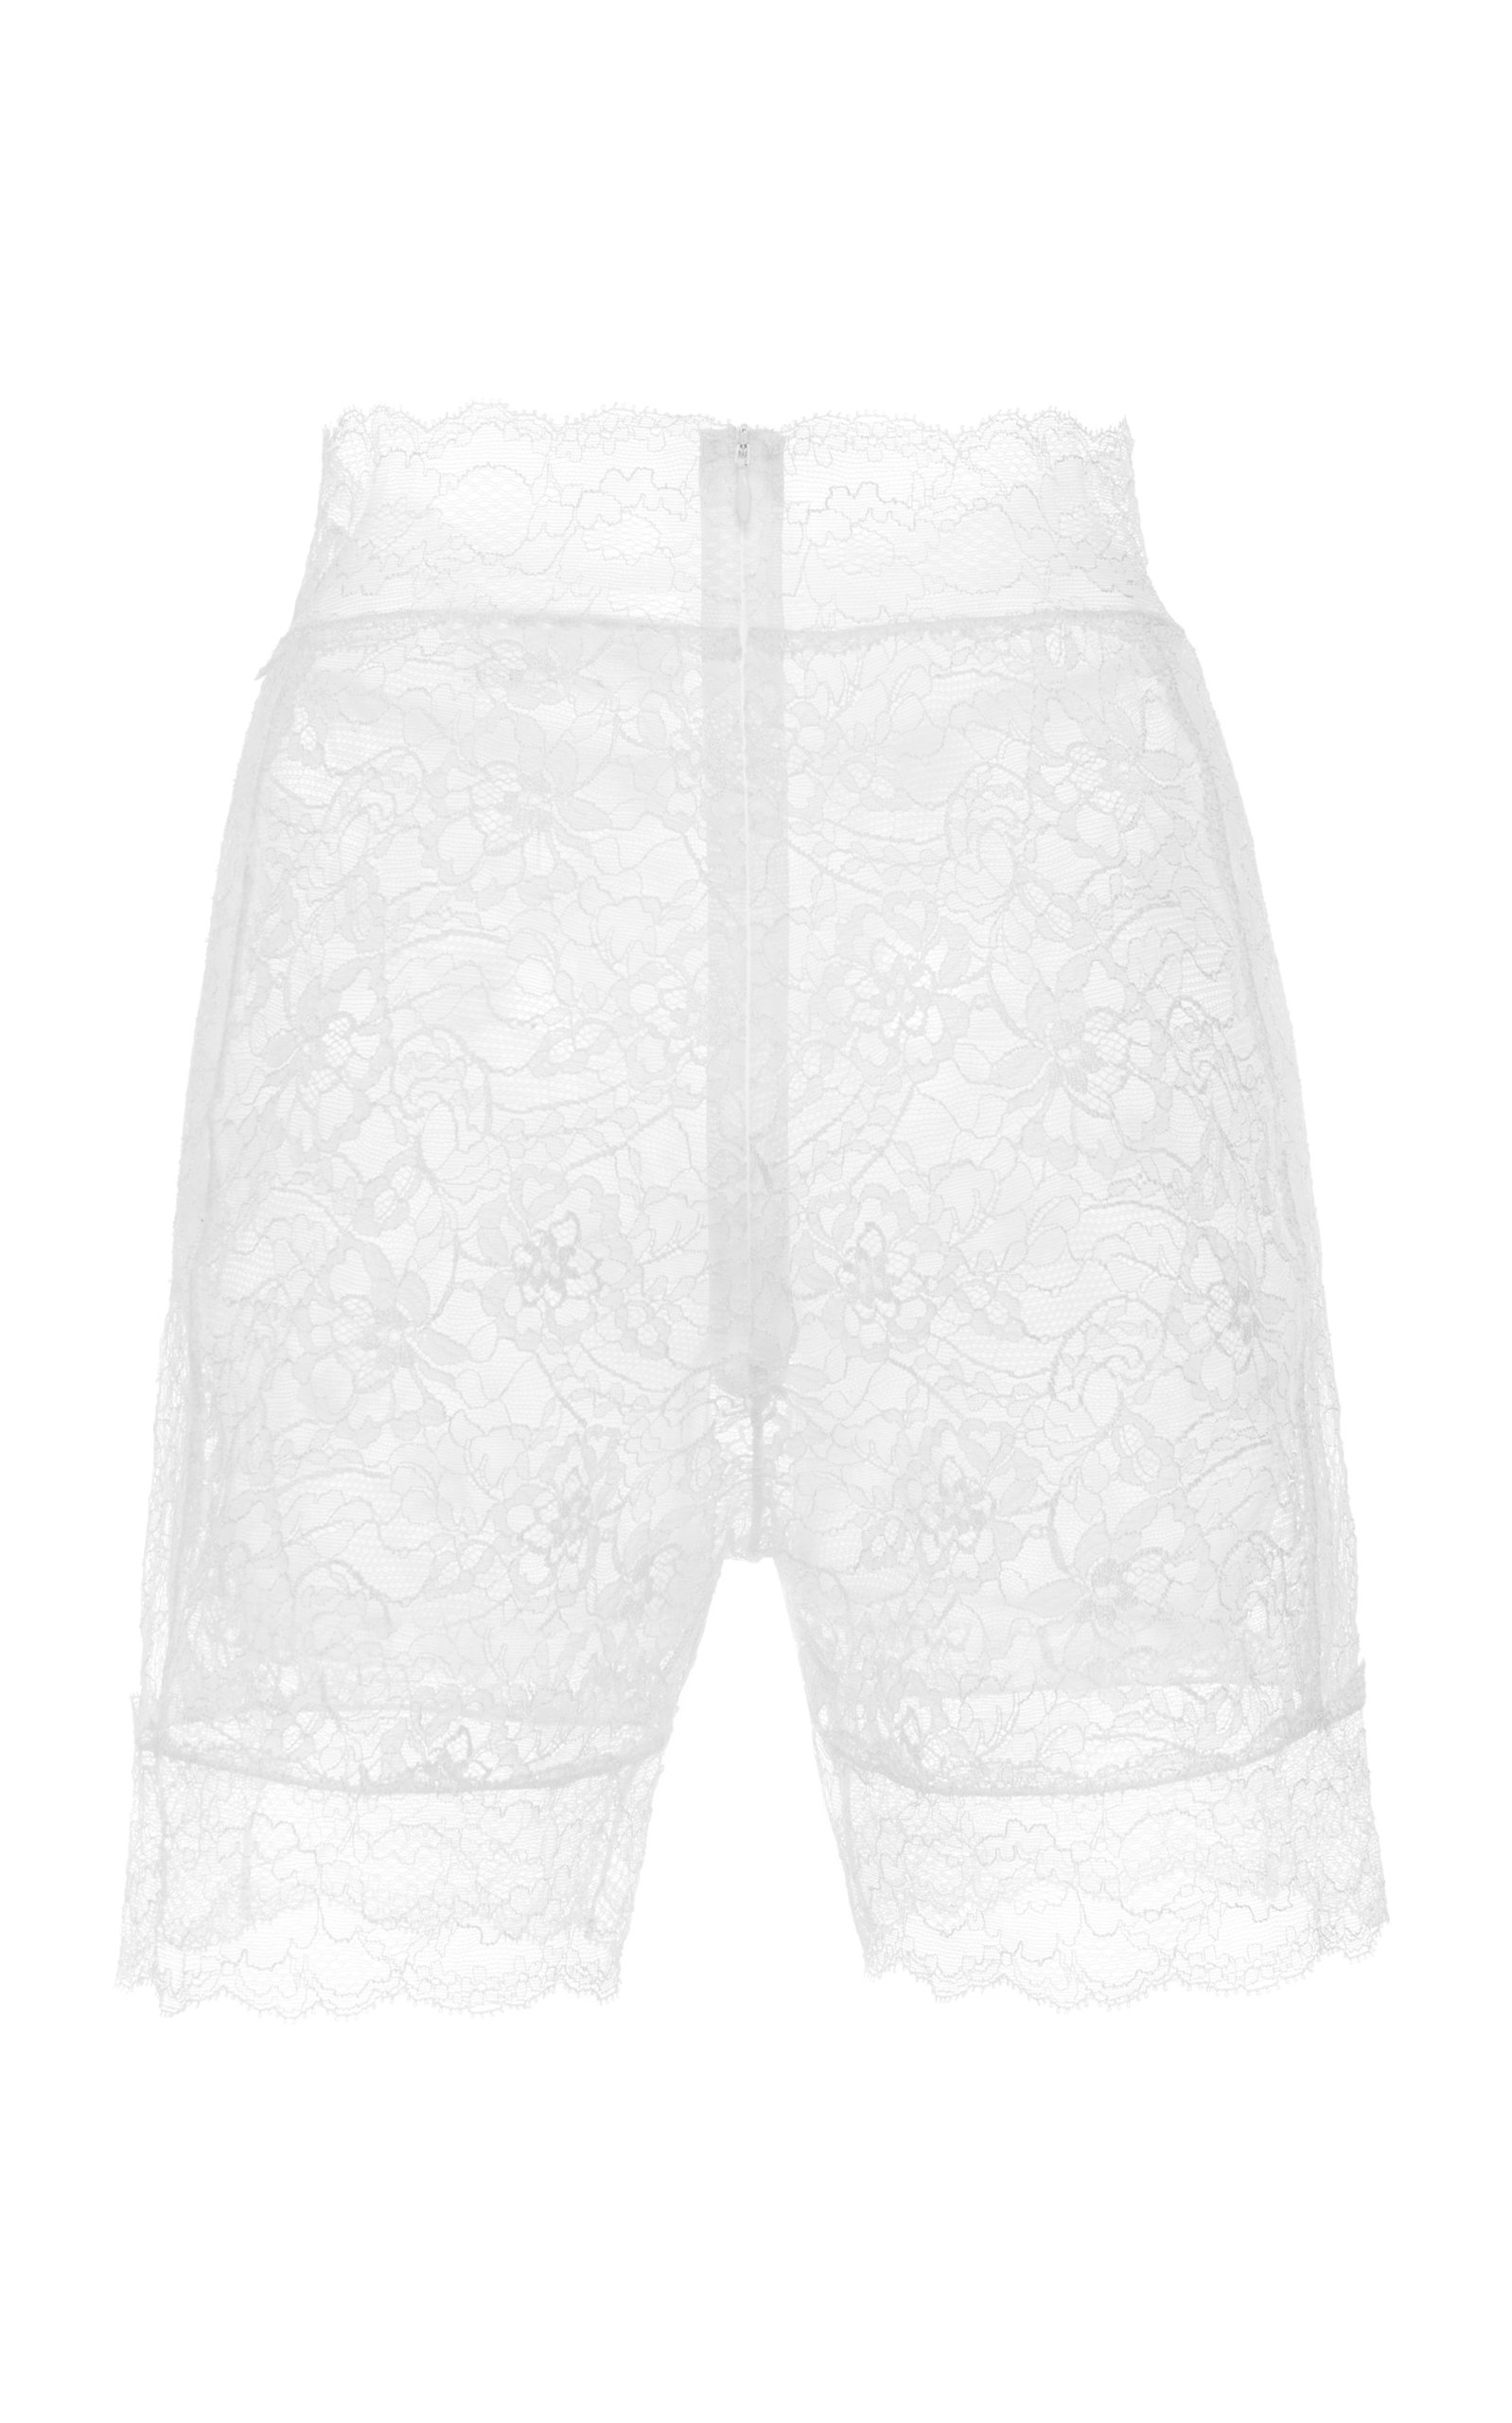 white lace cycling shorts